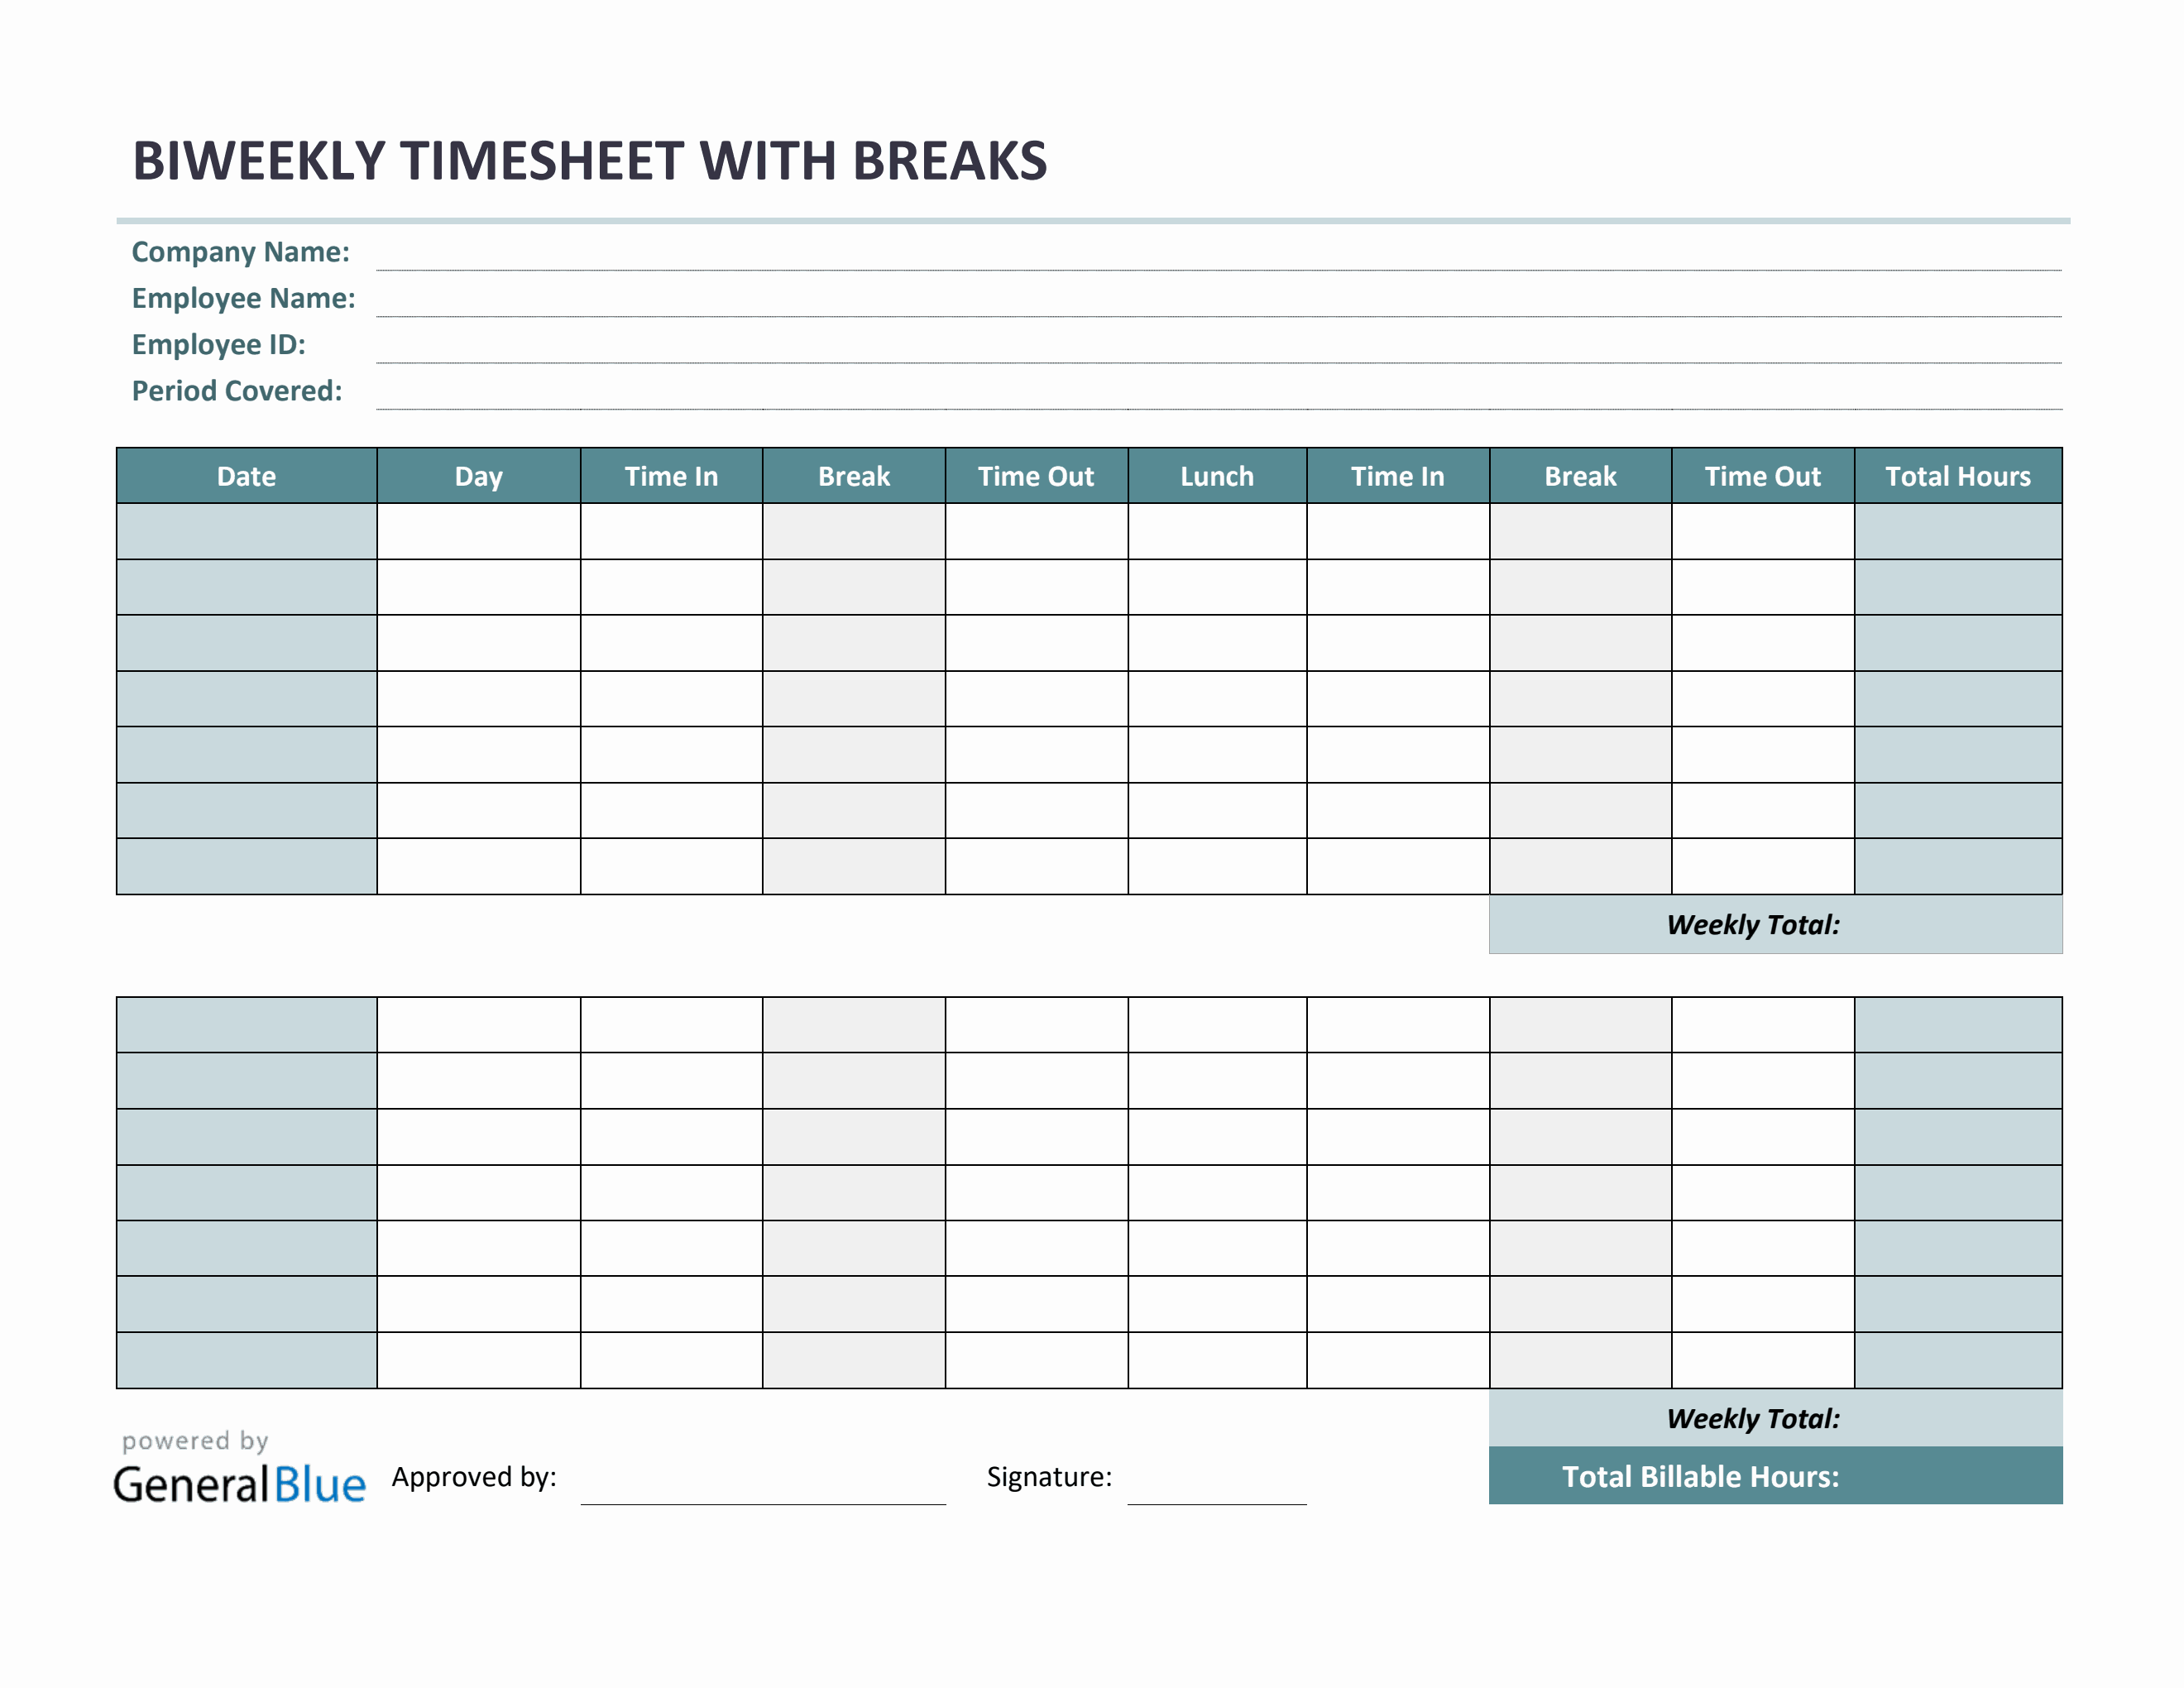 biweekly-timesheet-templates